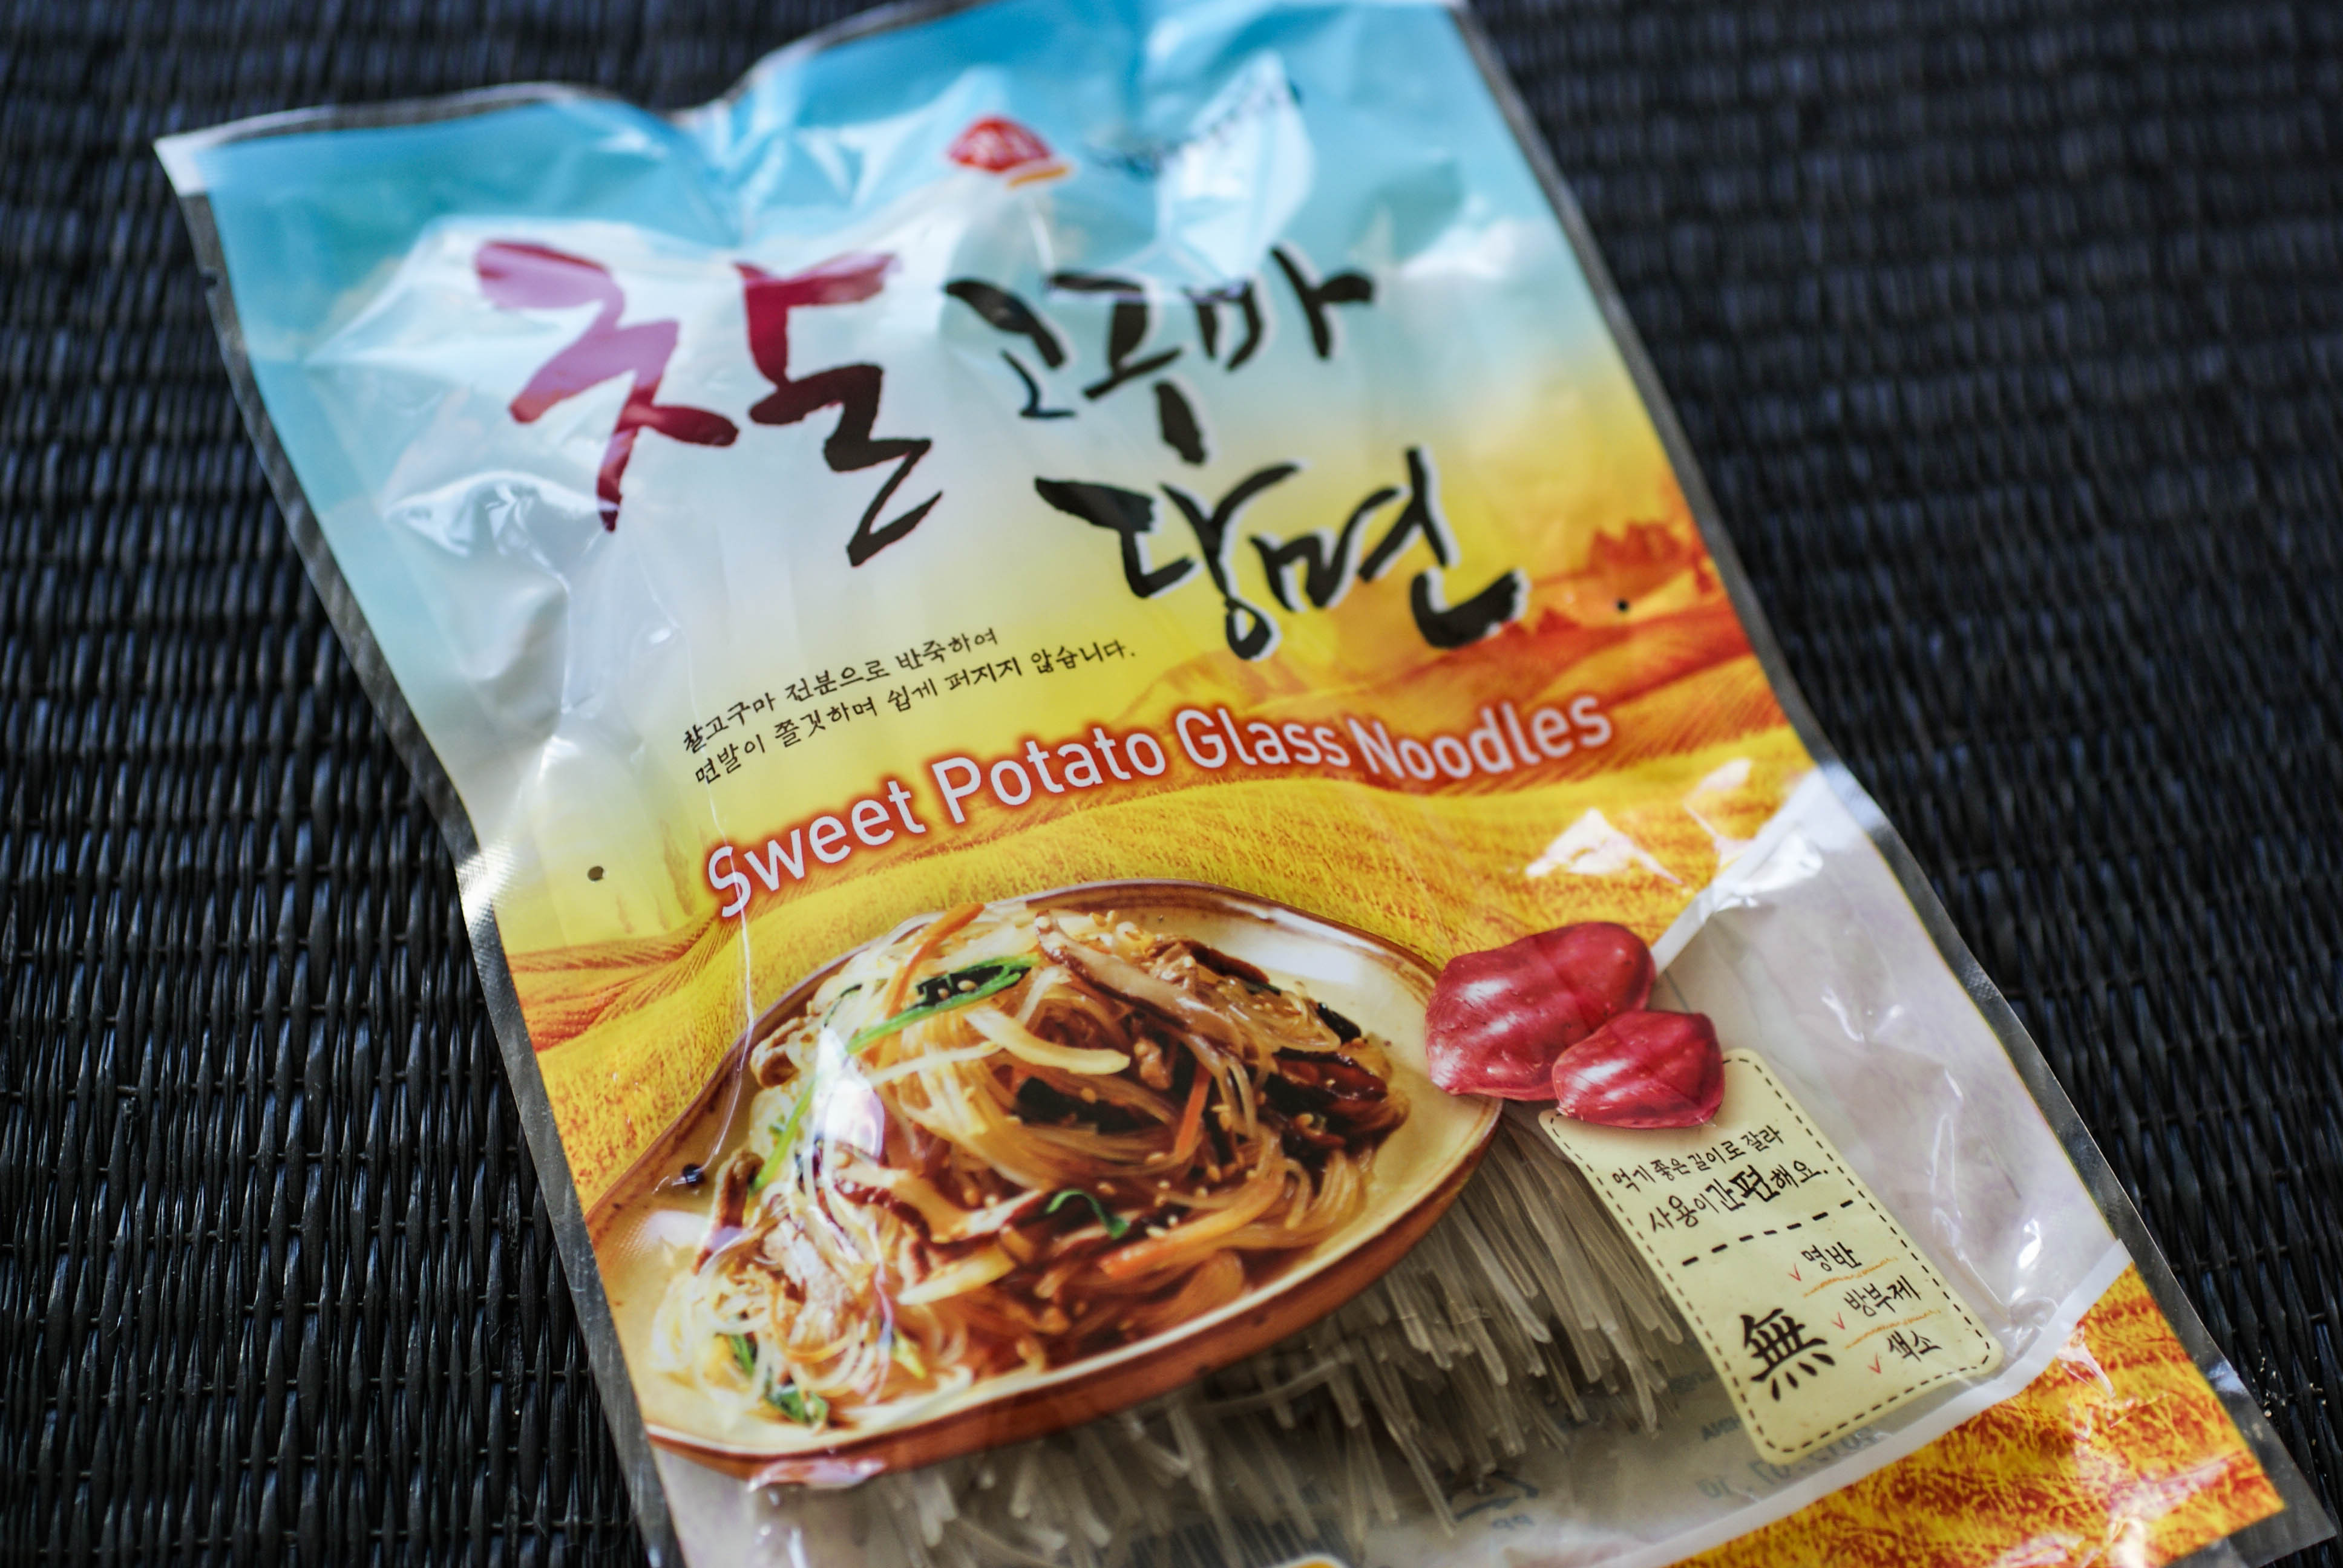 Sweet Potato Glass Noodles
 Korean Sweet Potato Glass Noodles Jap Chae w chicken